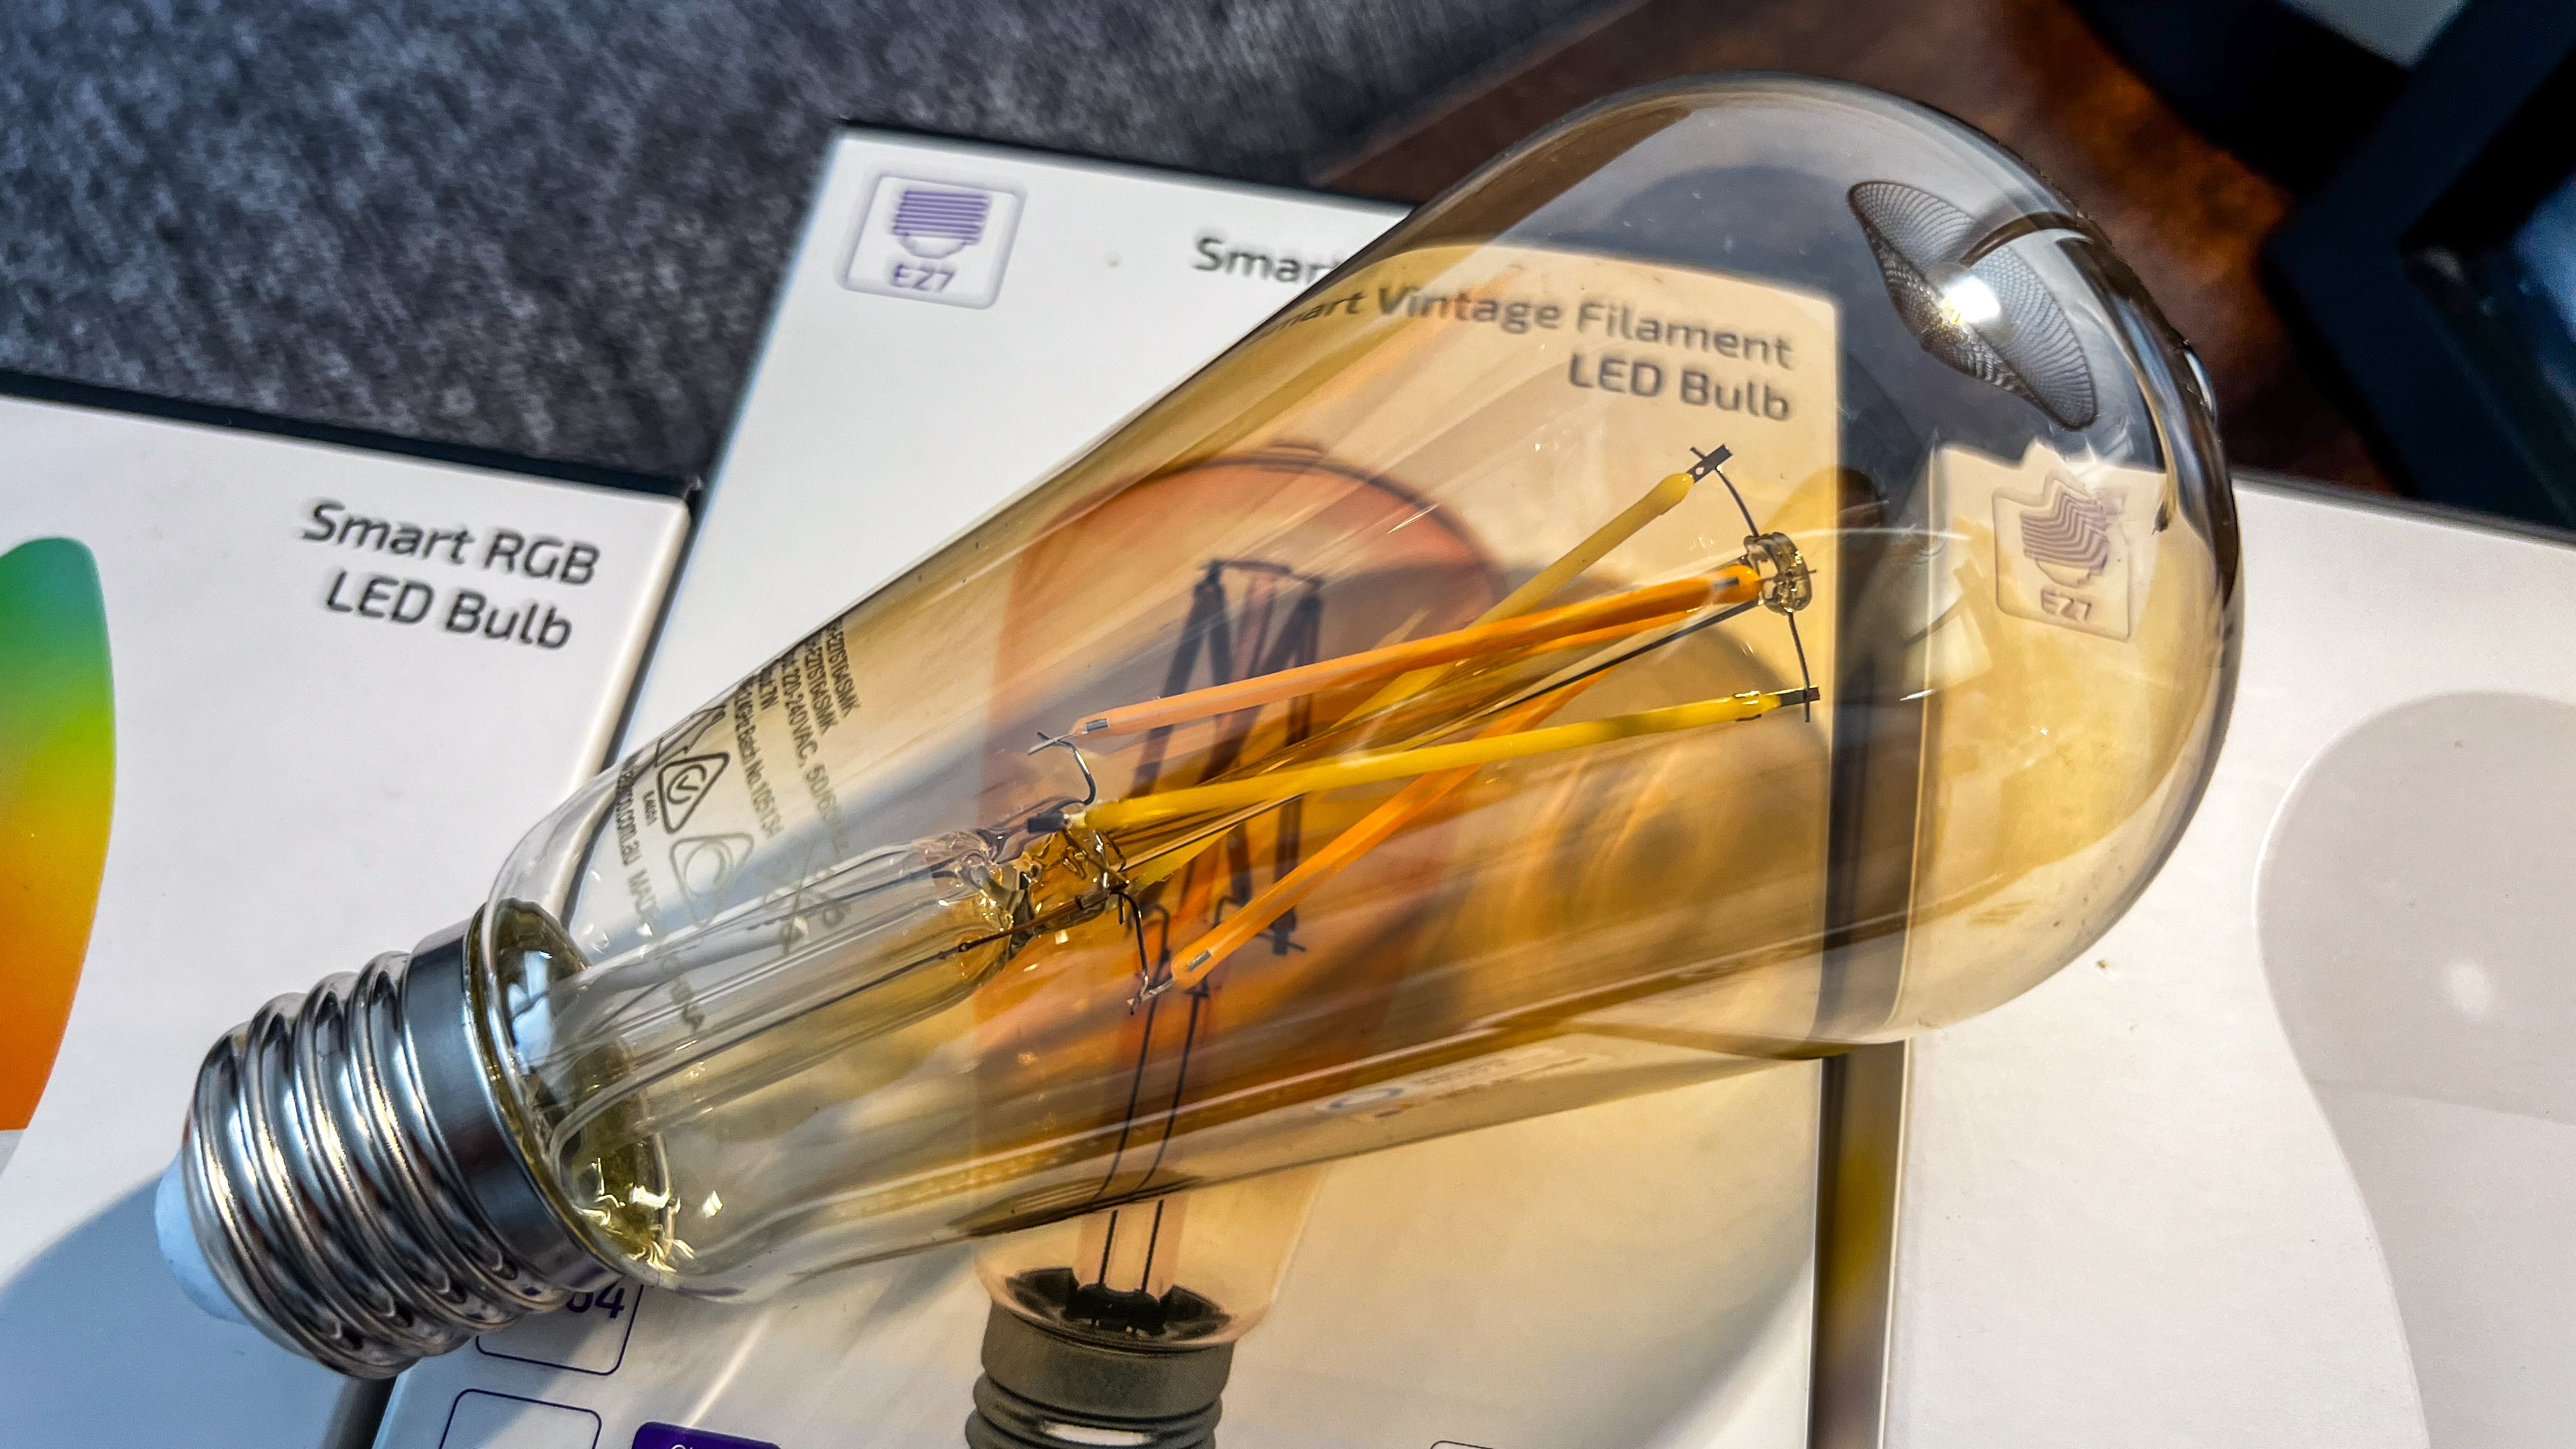 Laser filament smart bulb in the amber globe